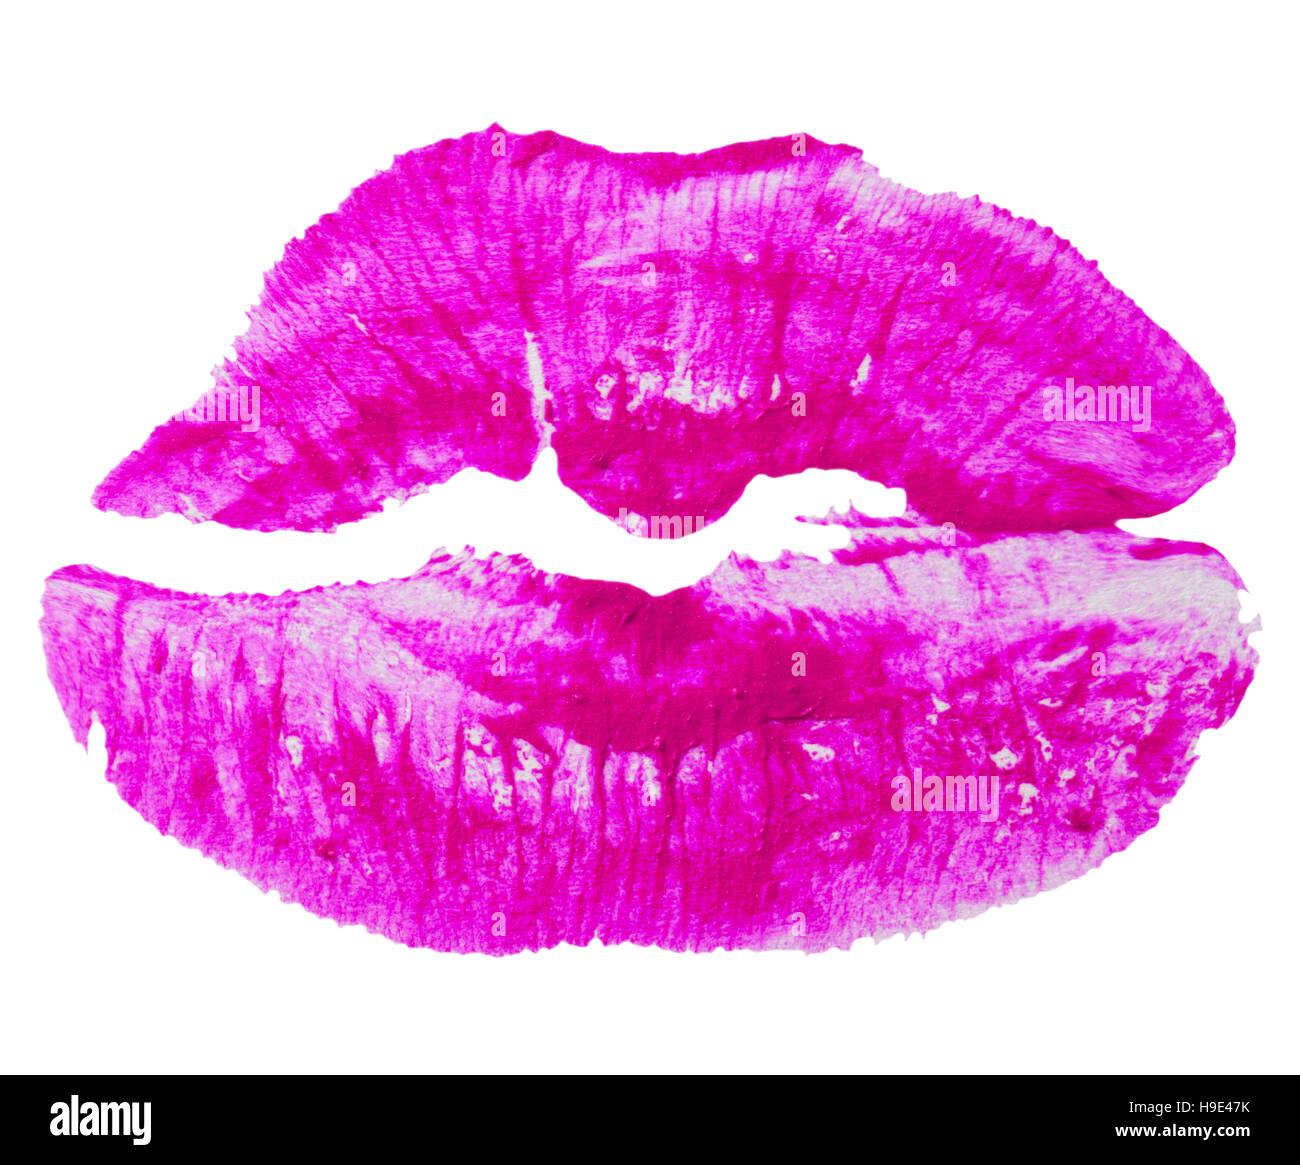 dark pink lips imprint isolated on white background. Stock Photo